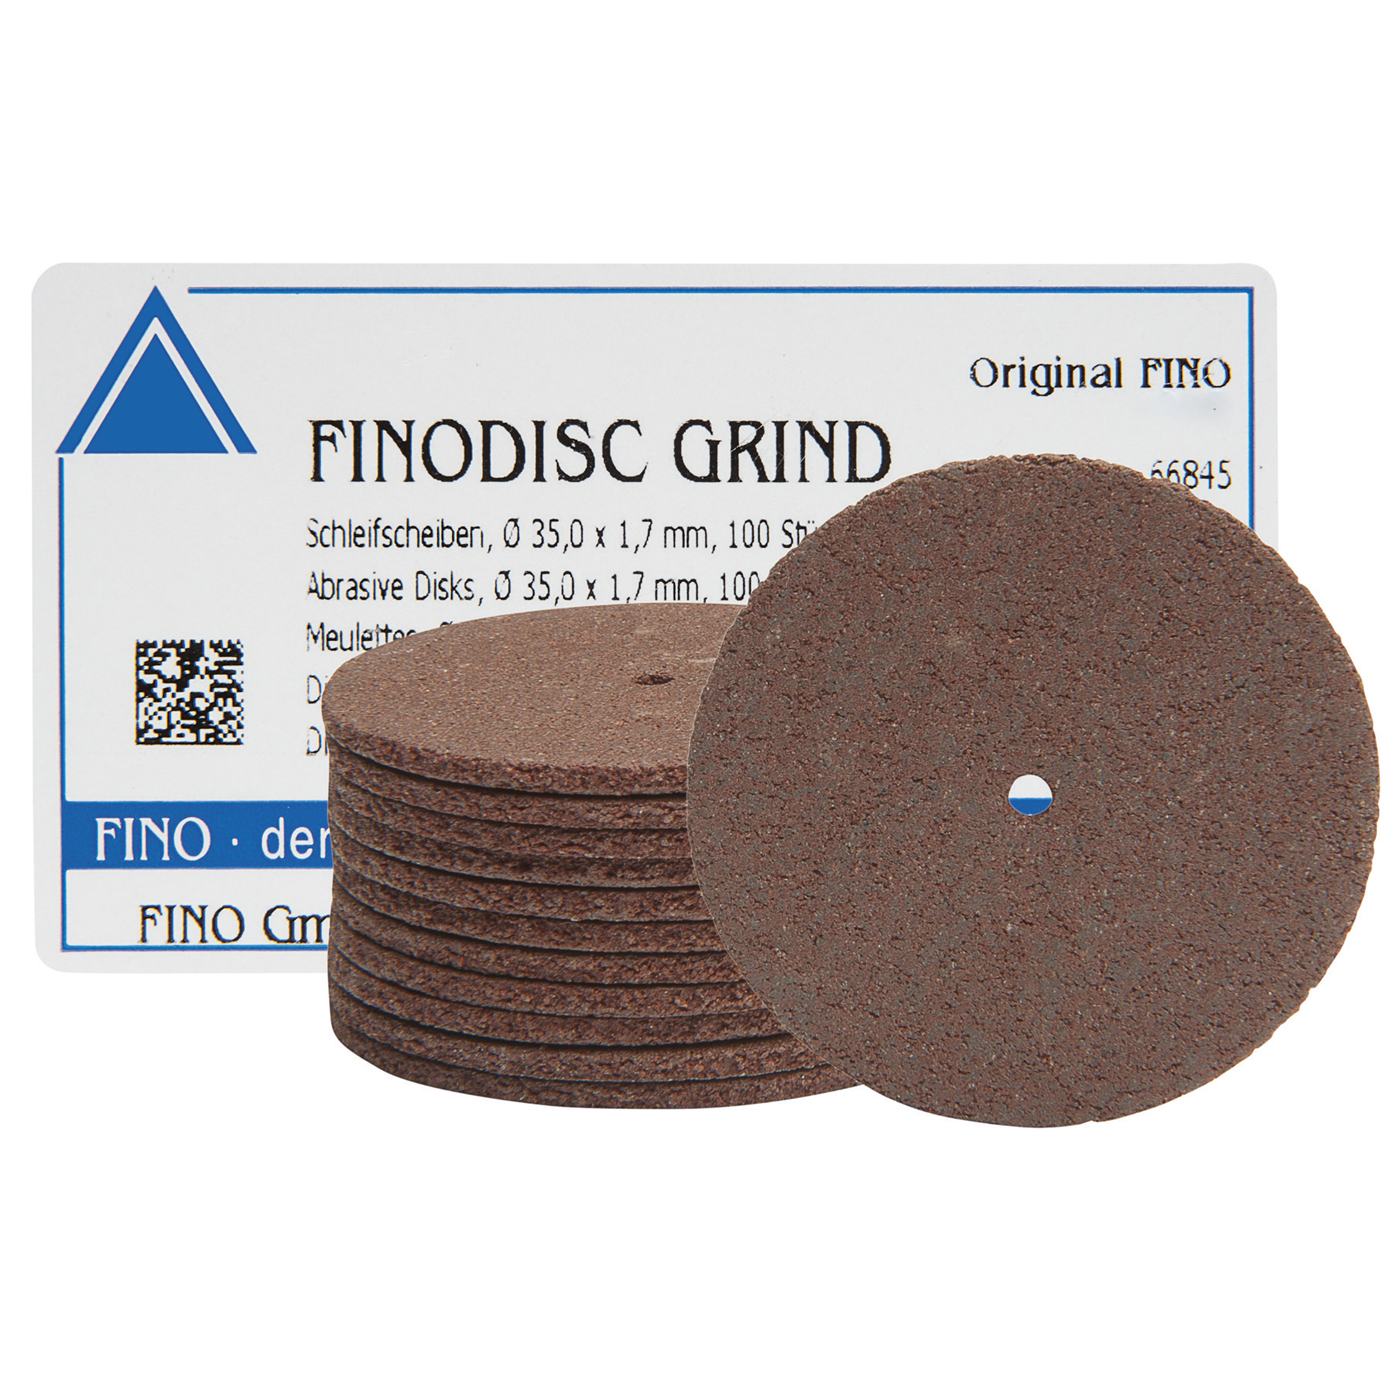 FINODISC GRIND Grinding Discs, ø 35 x 1.7 mm - 100 pieces